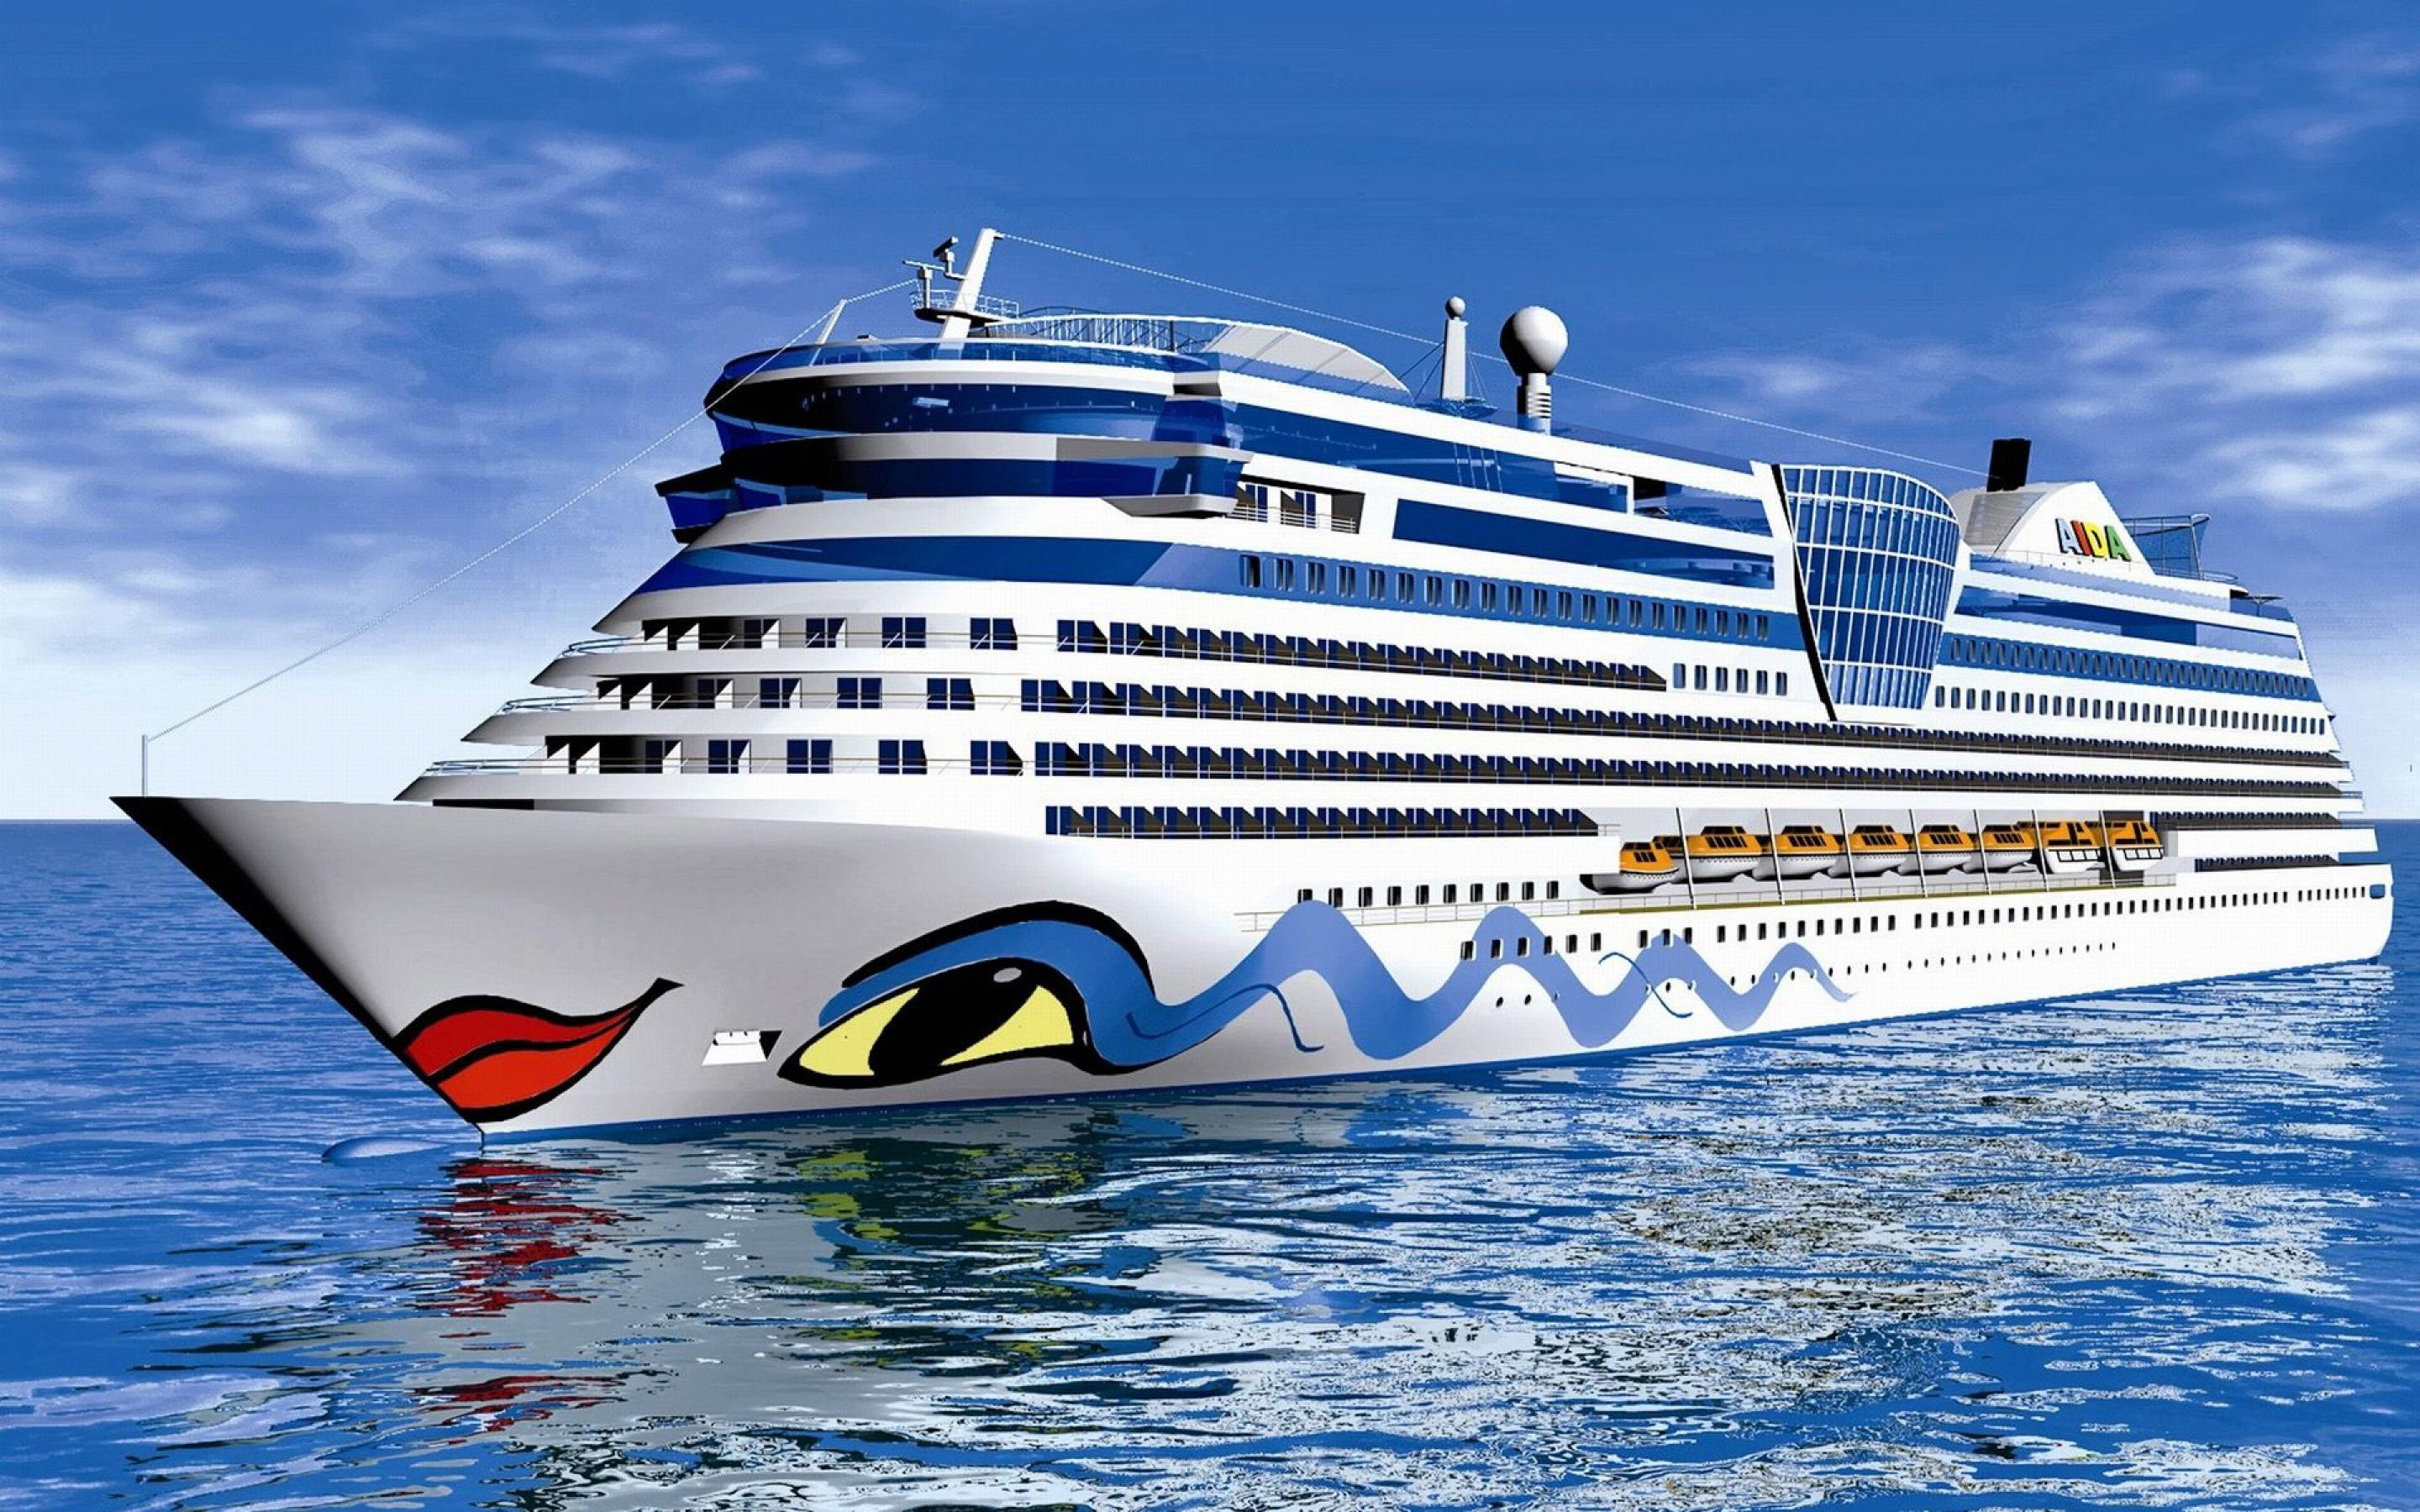 cruise wallpaper,cruise ship,vehicle,water transportation,passenger ship,ship